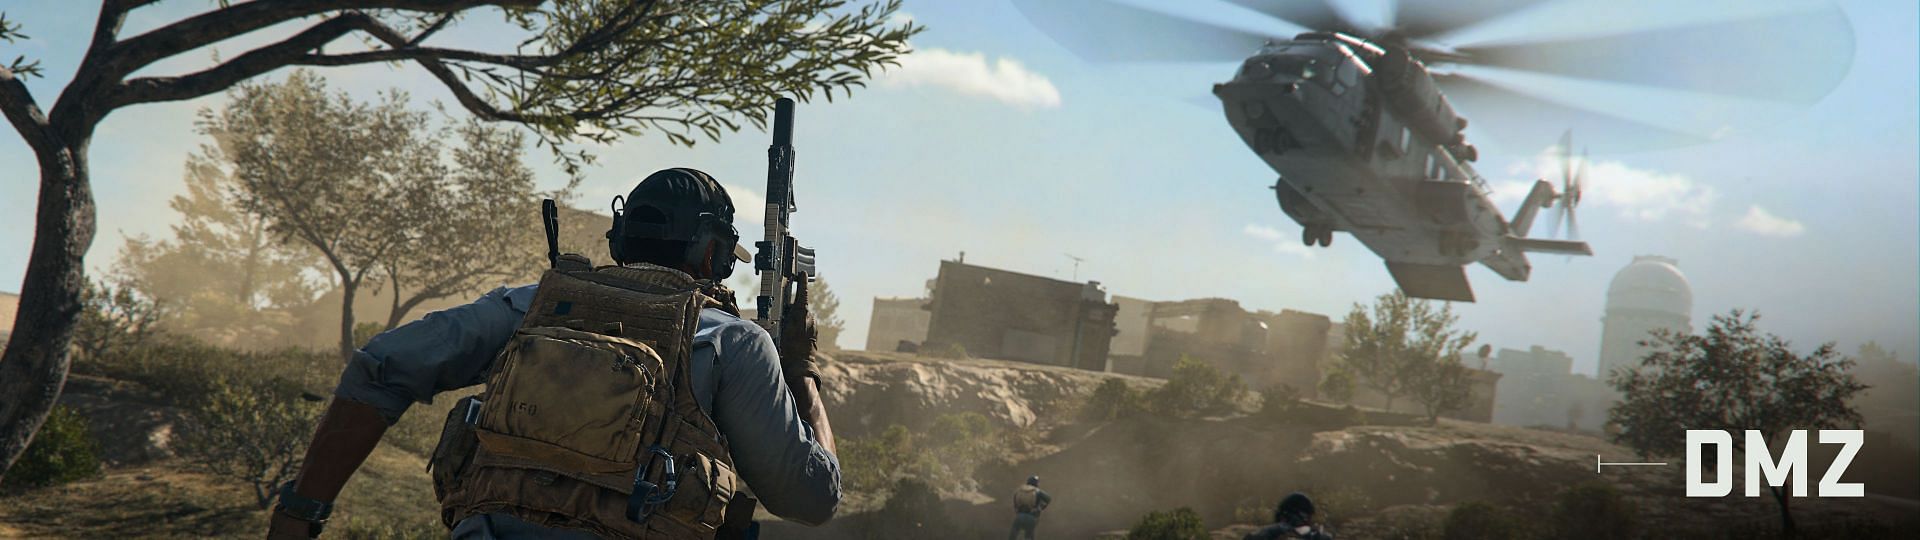 Warzone 2 DMZ Changes (Image via Activision)